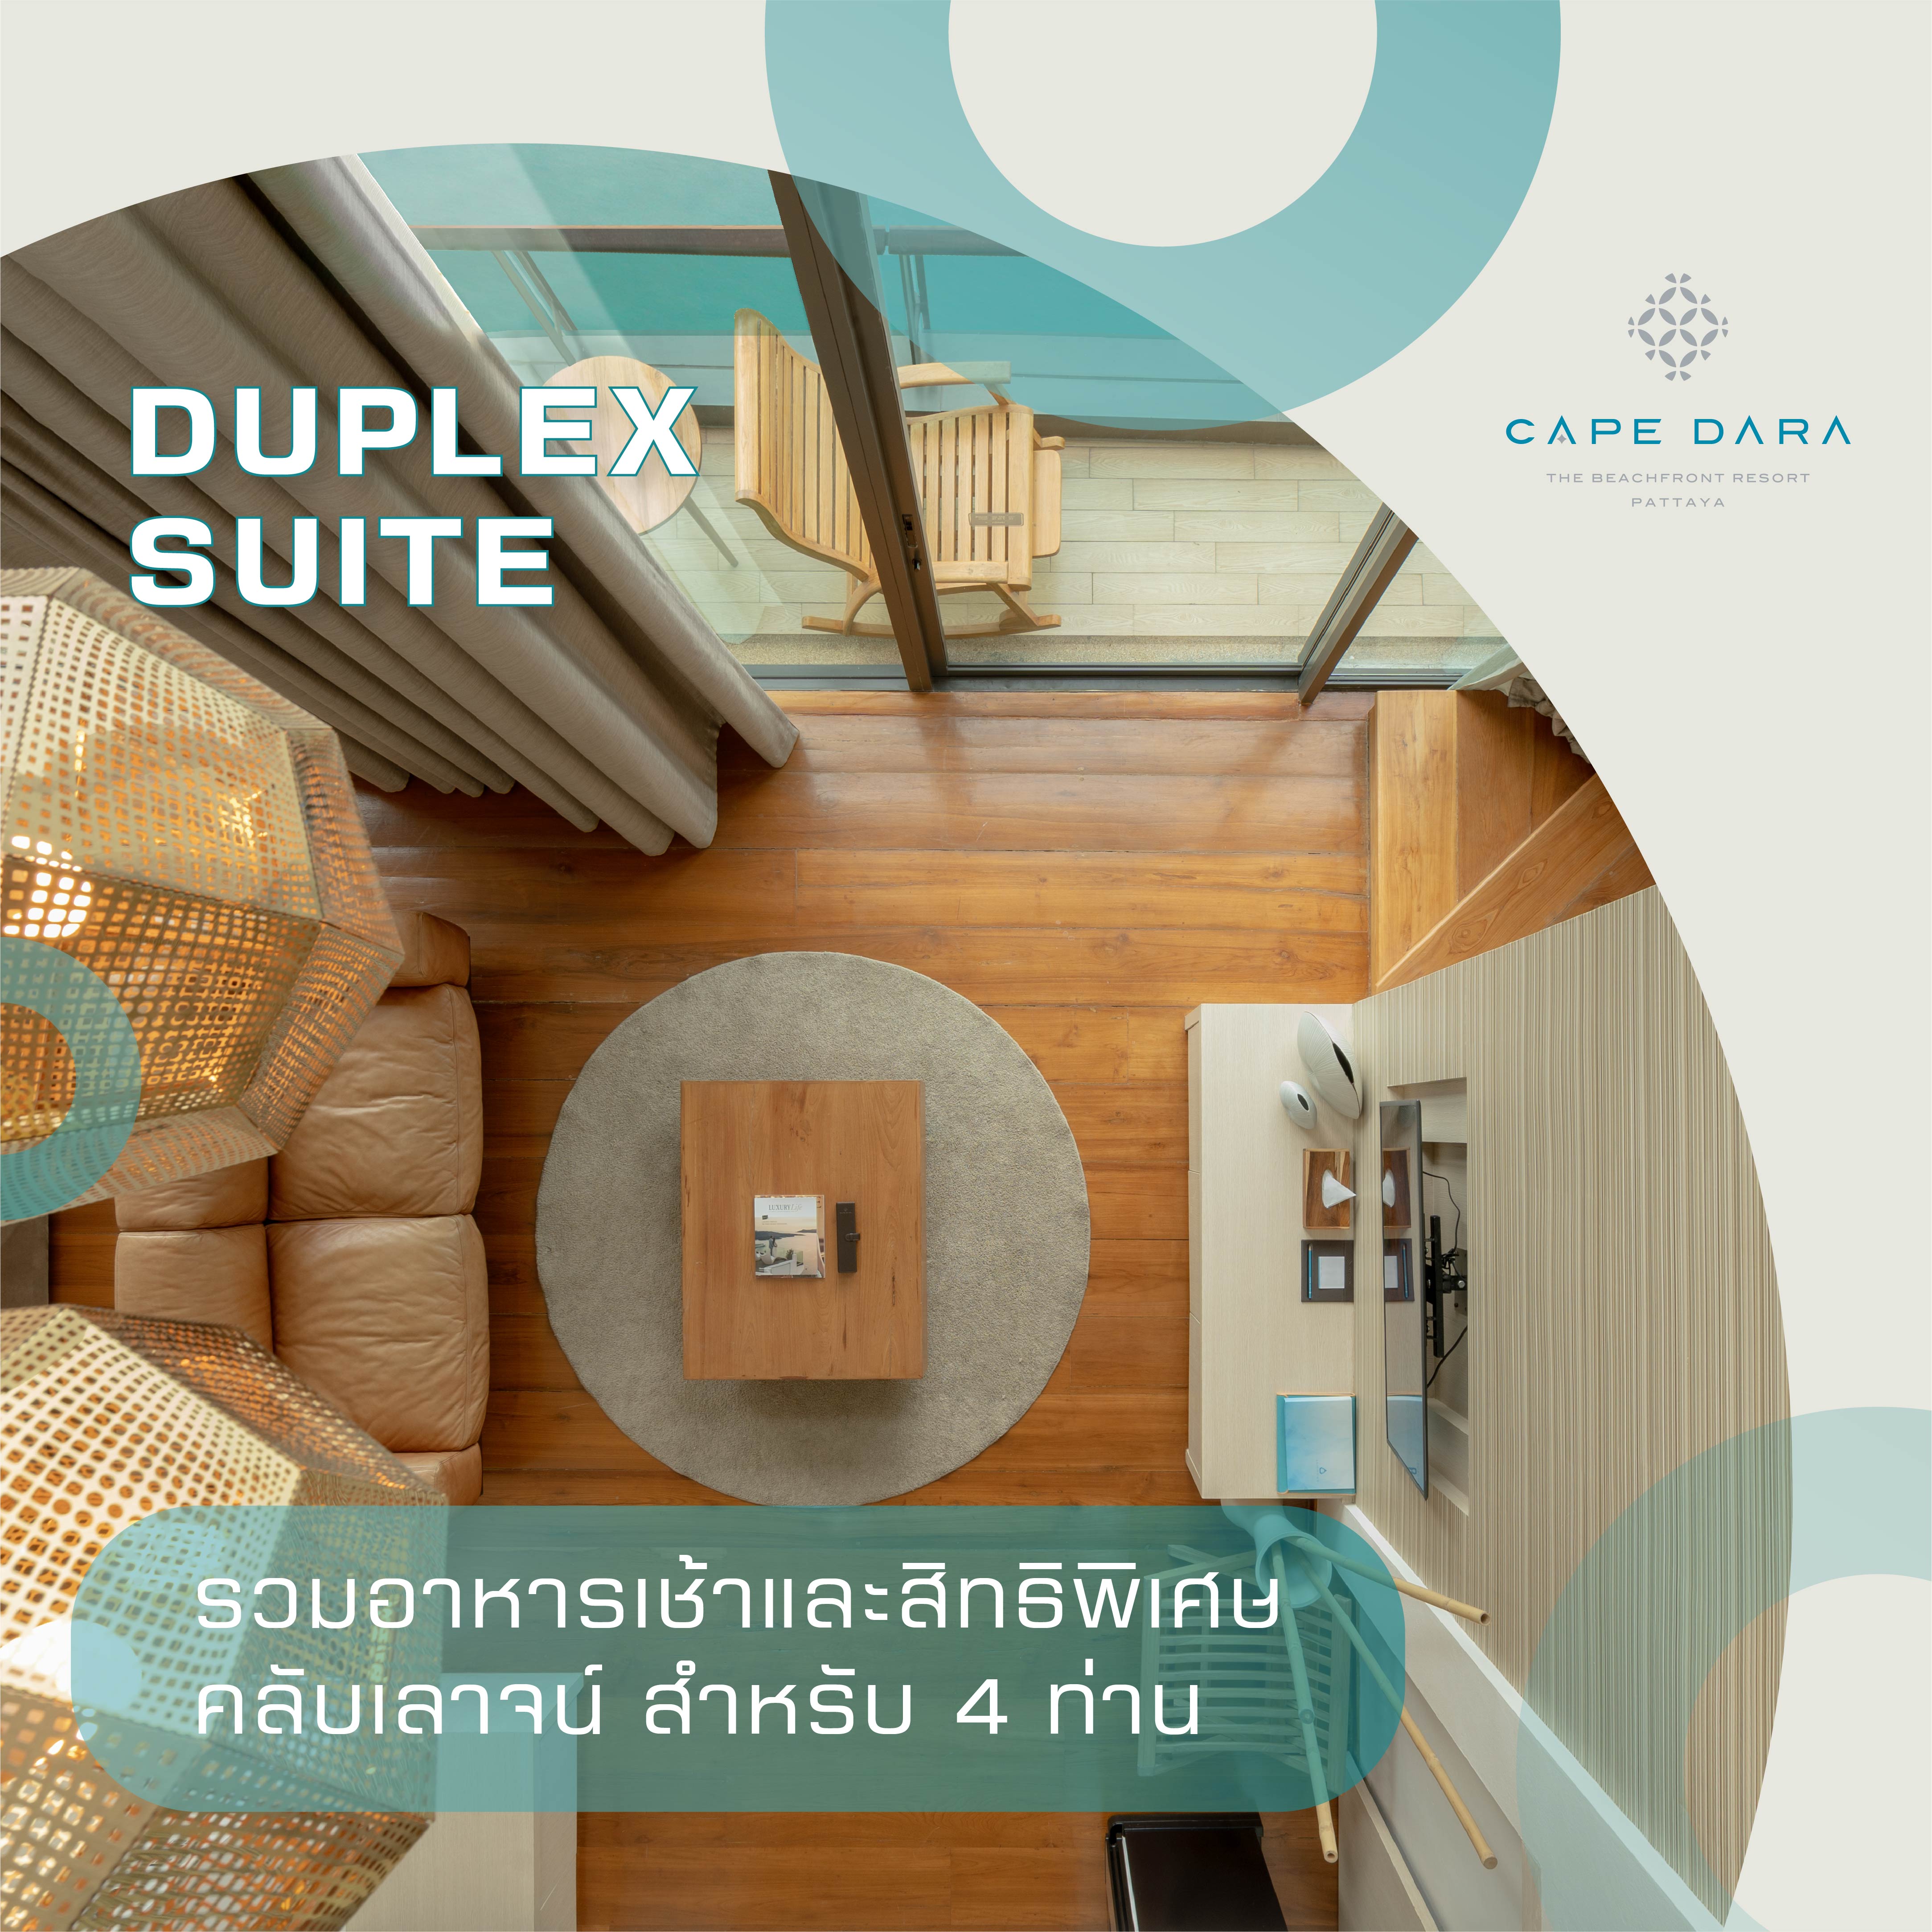 E-Voucher Cape Dara Pattaya ห้อง DUPLEX SUITE